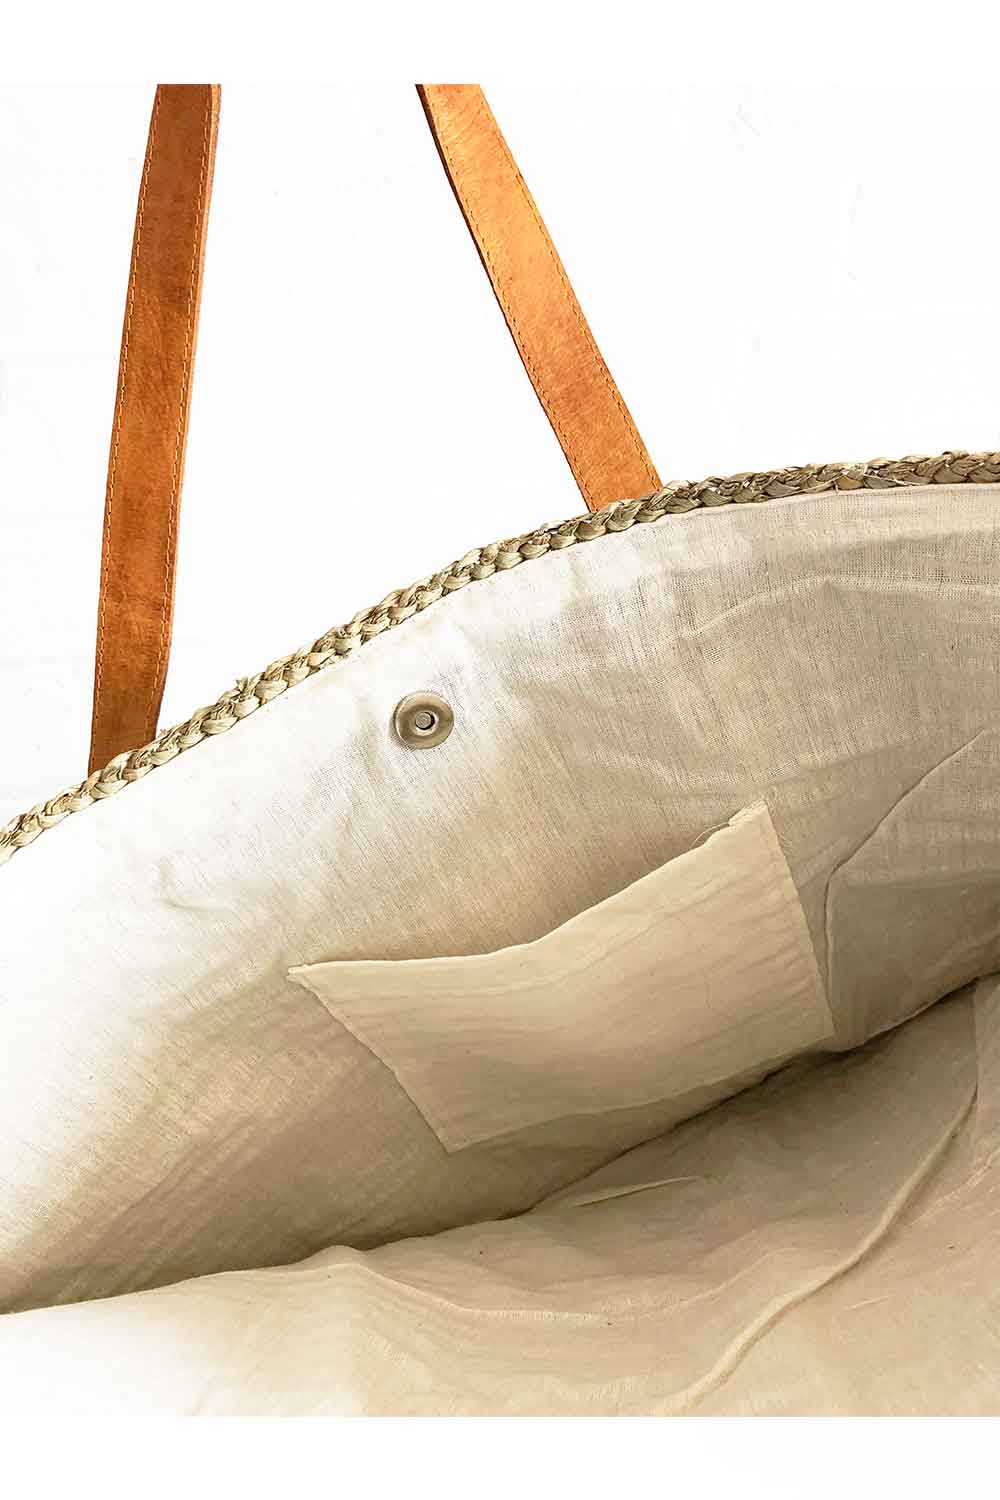 Sanbasics Basket Weave Beach Bag with Leather Strap